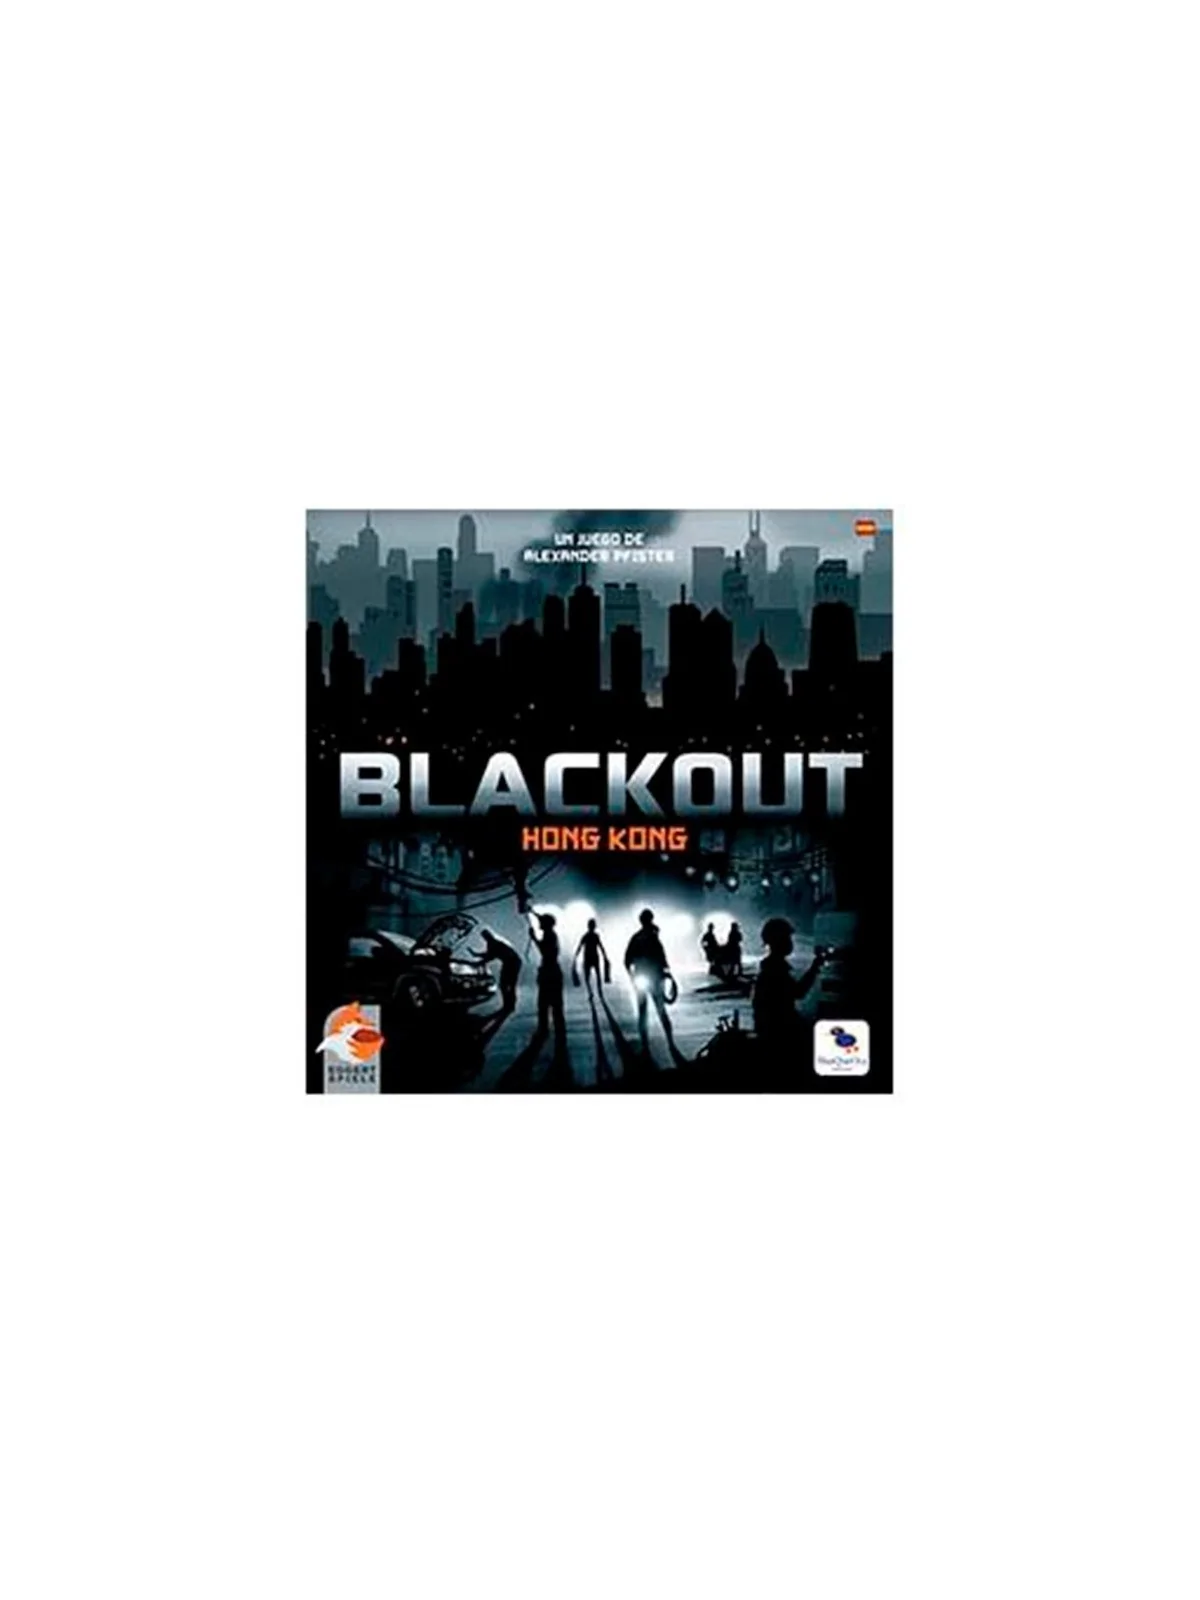 Comprar BlackOut: Hong Kong barato al mejor precio 44,99 € de MasQueOc